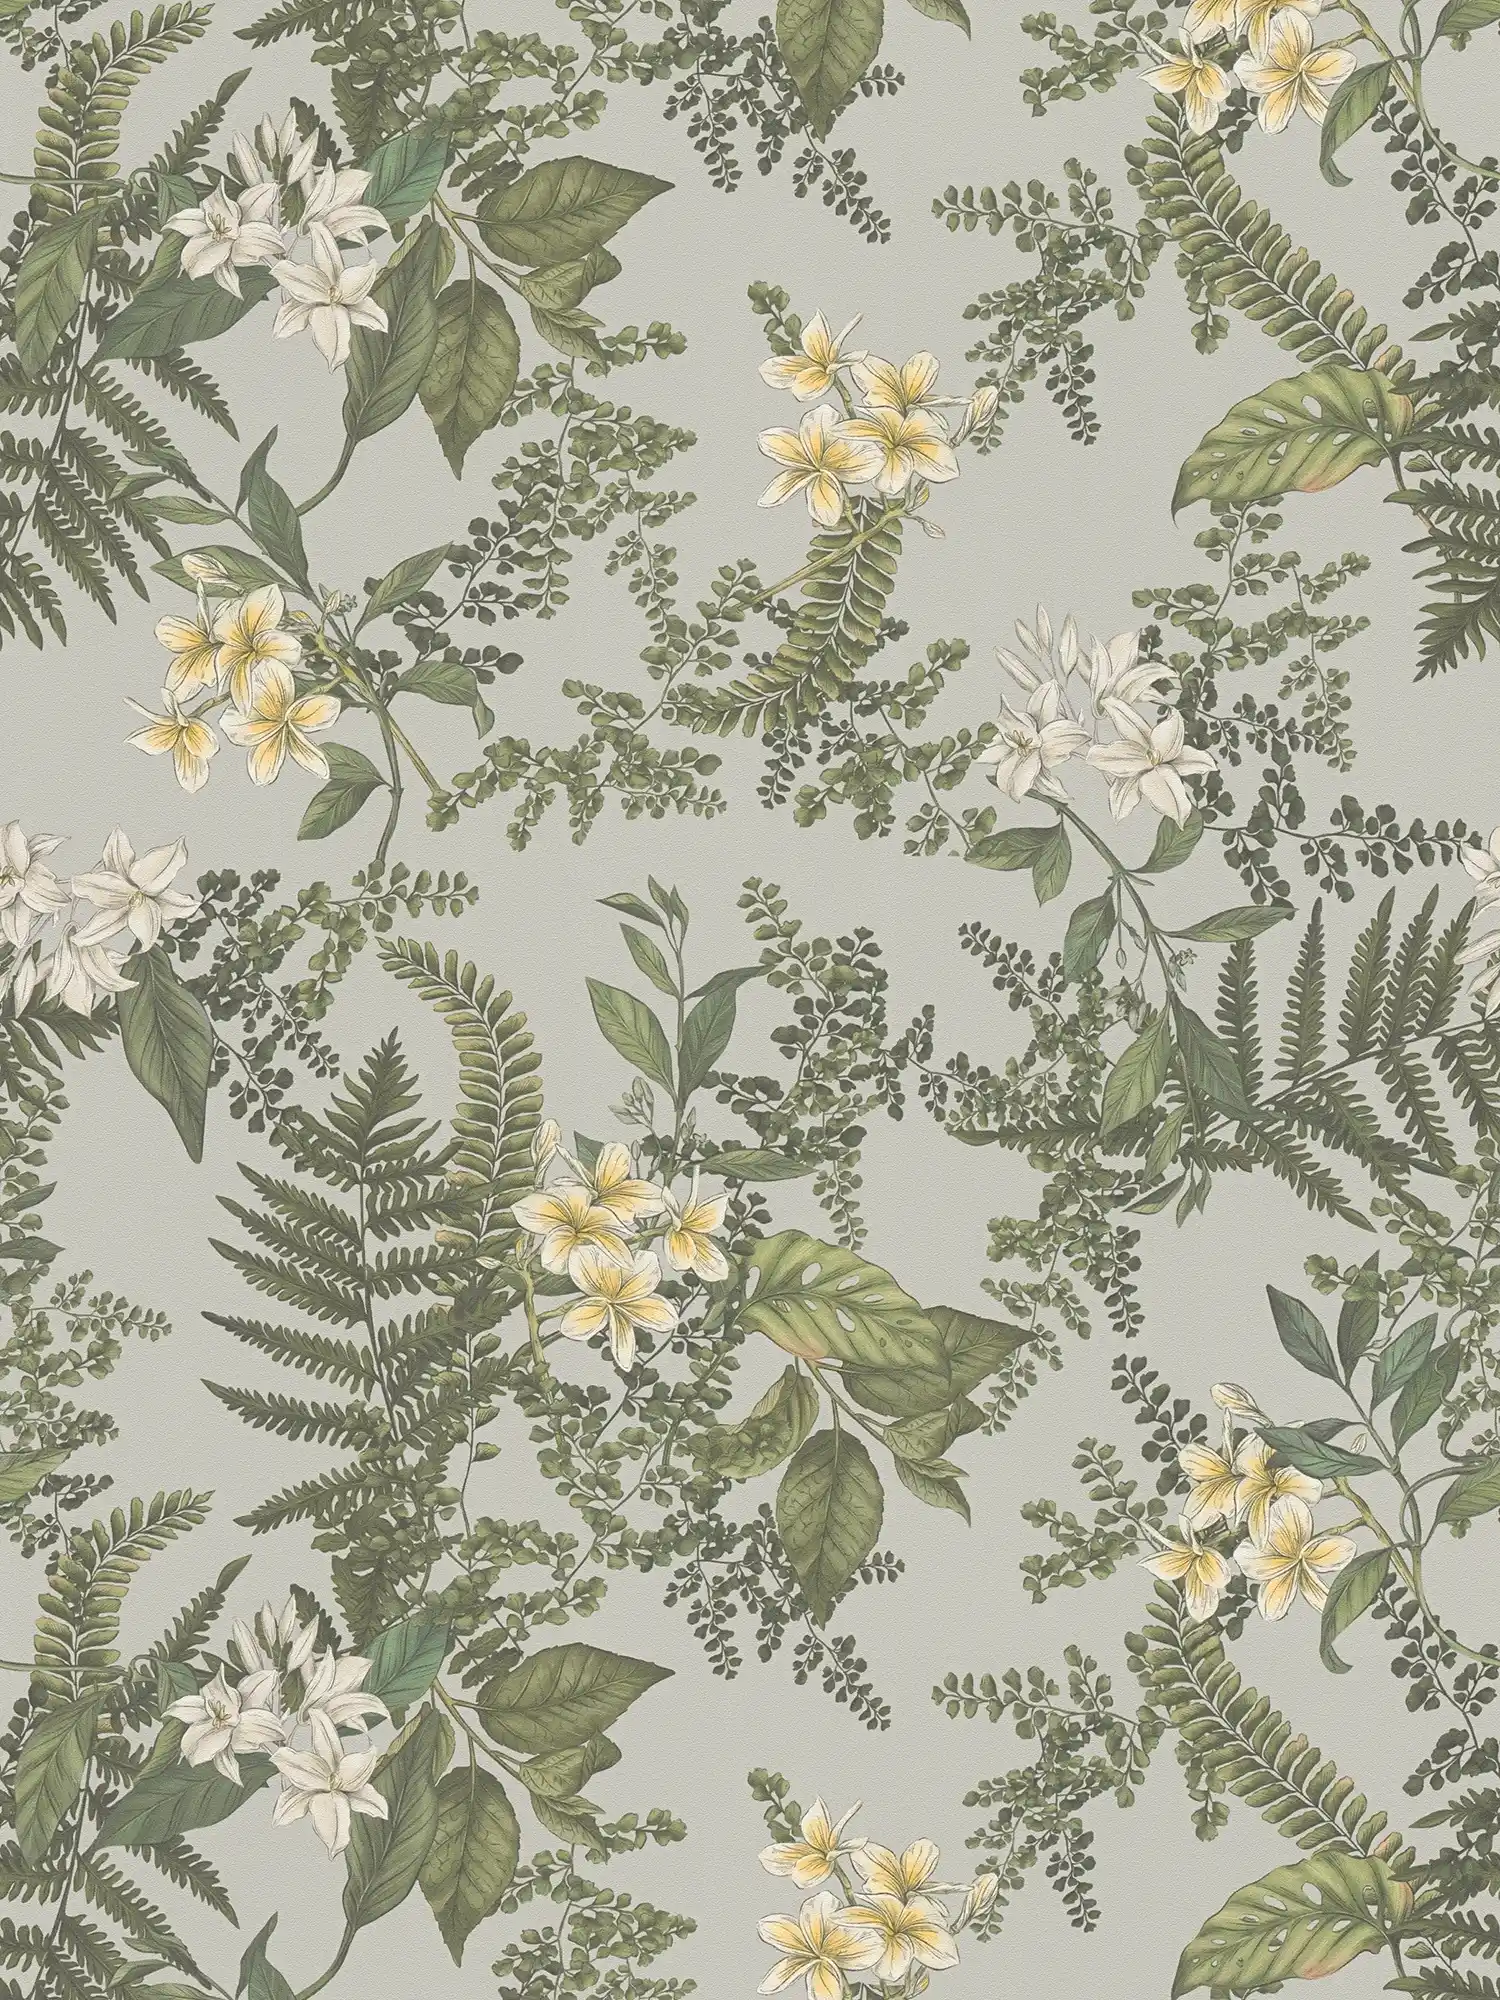 Modern floral style wallpaper with flowers & grasses textured matt - grey, dark green, white
